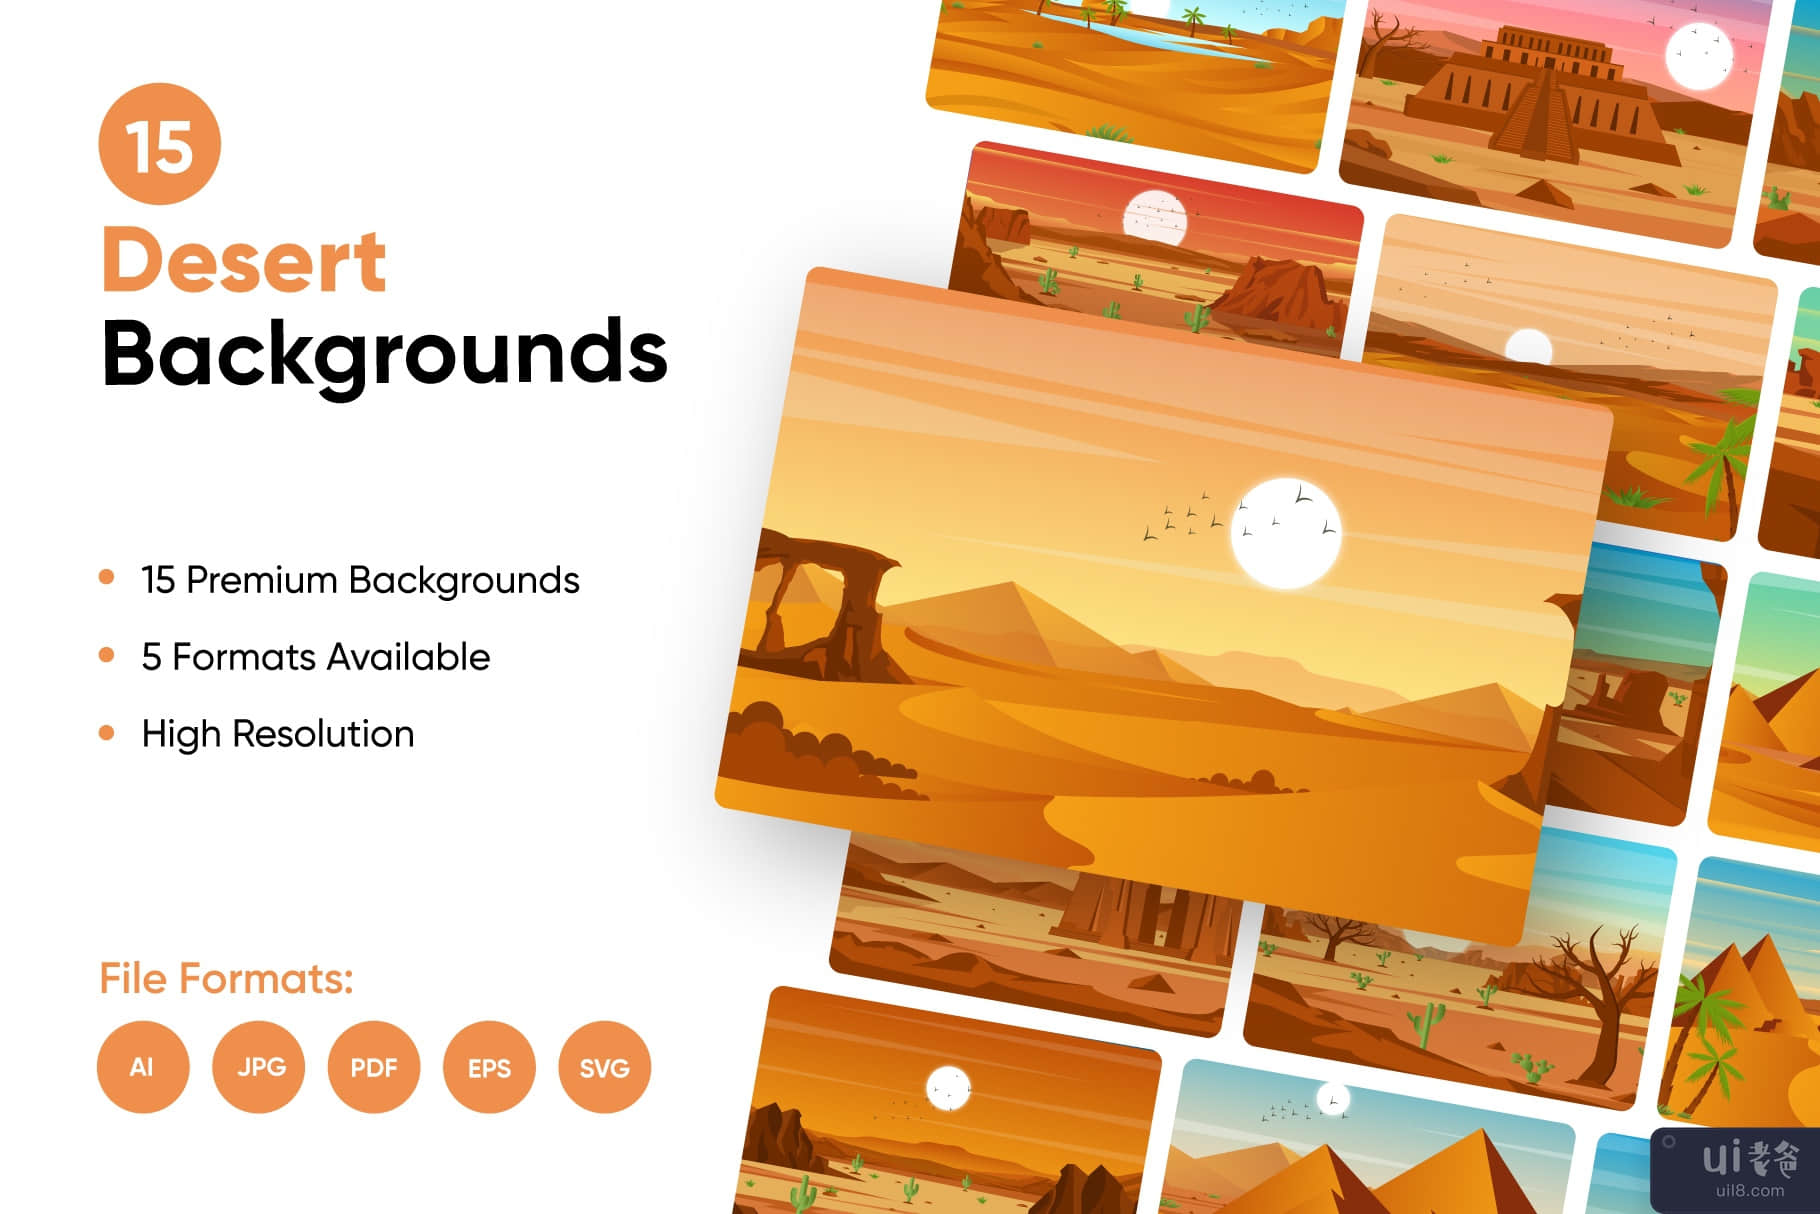 15 个沙漠背景插图(15 Desert Backgrounds Illustrations)插图7